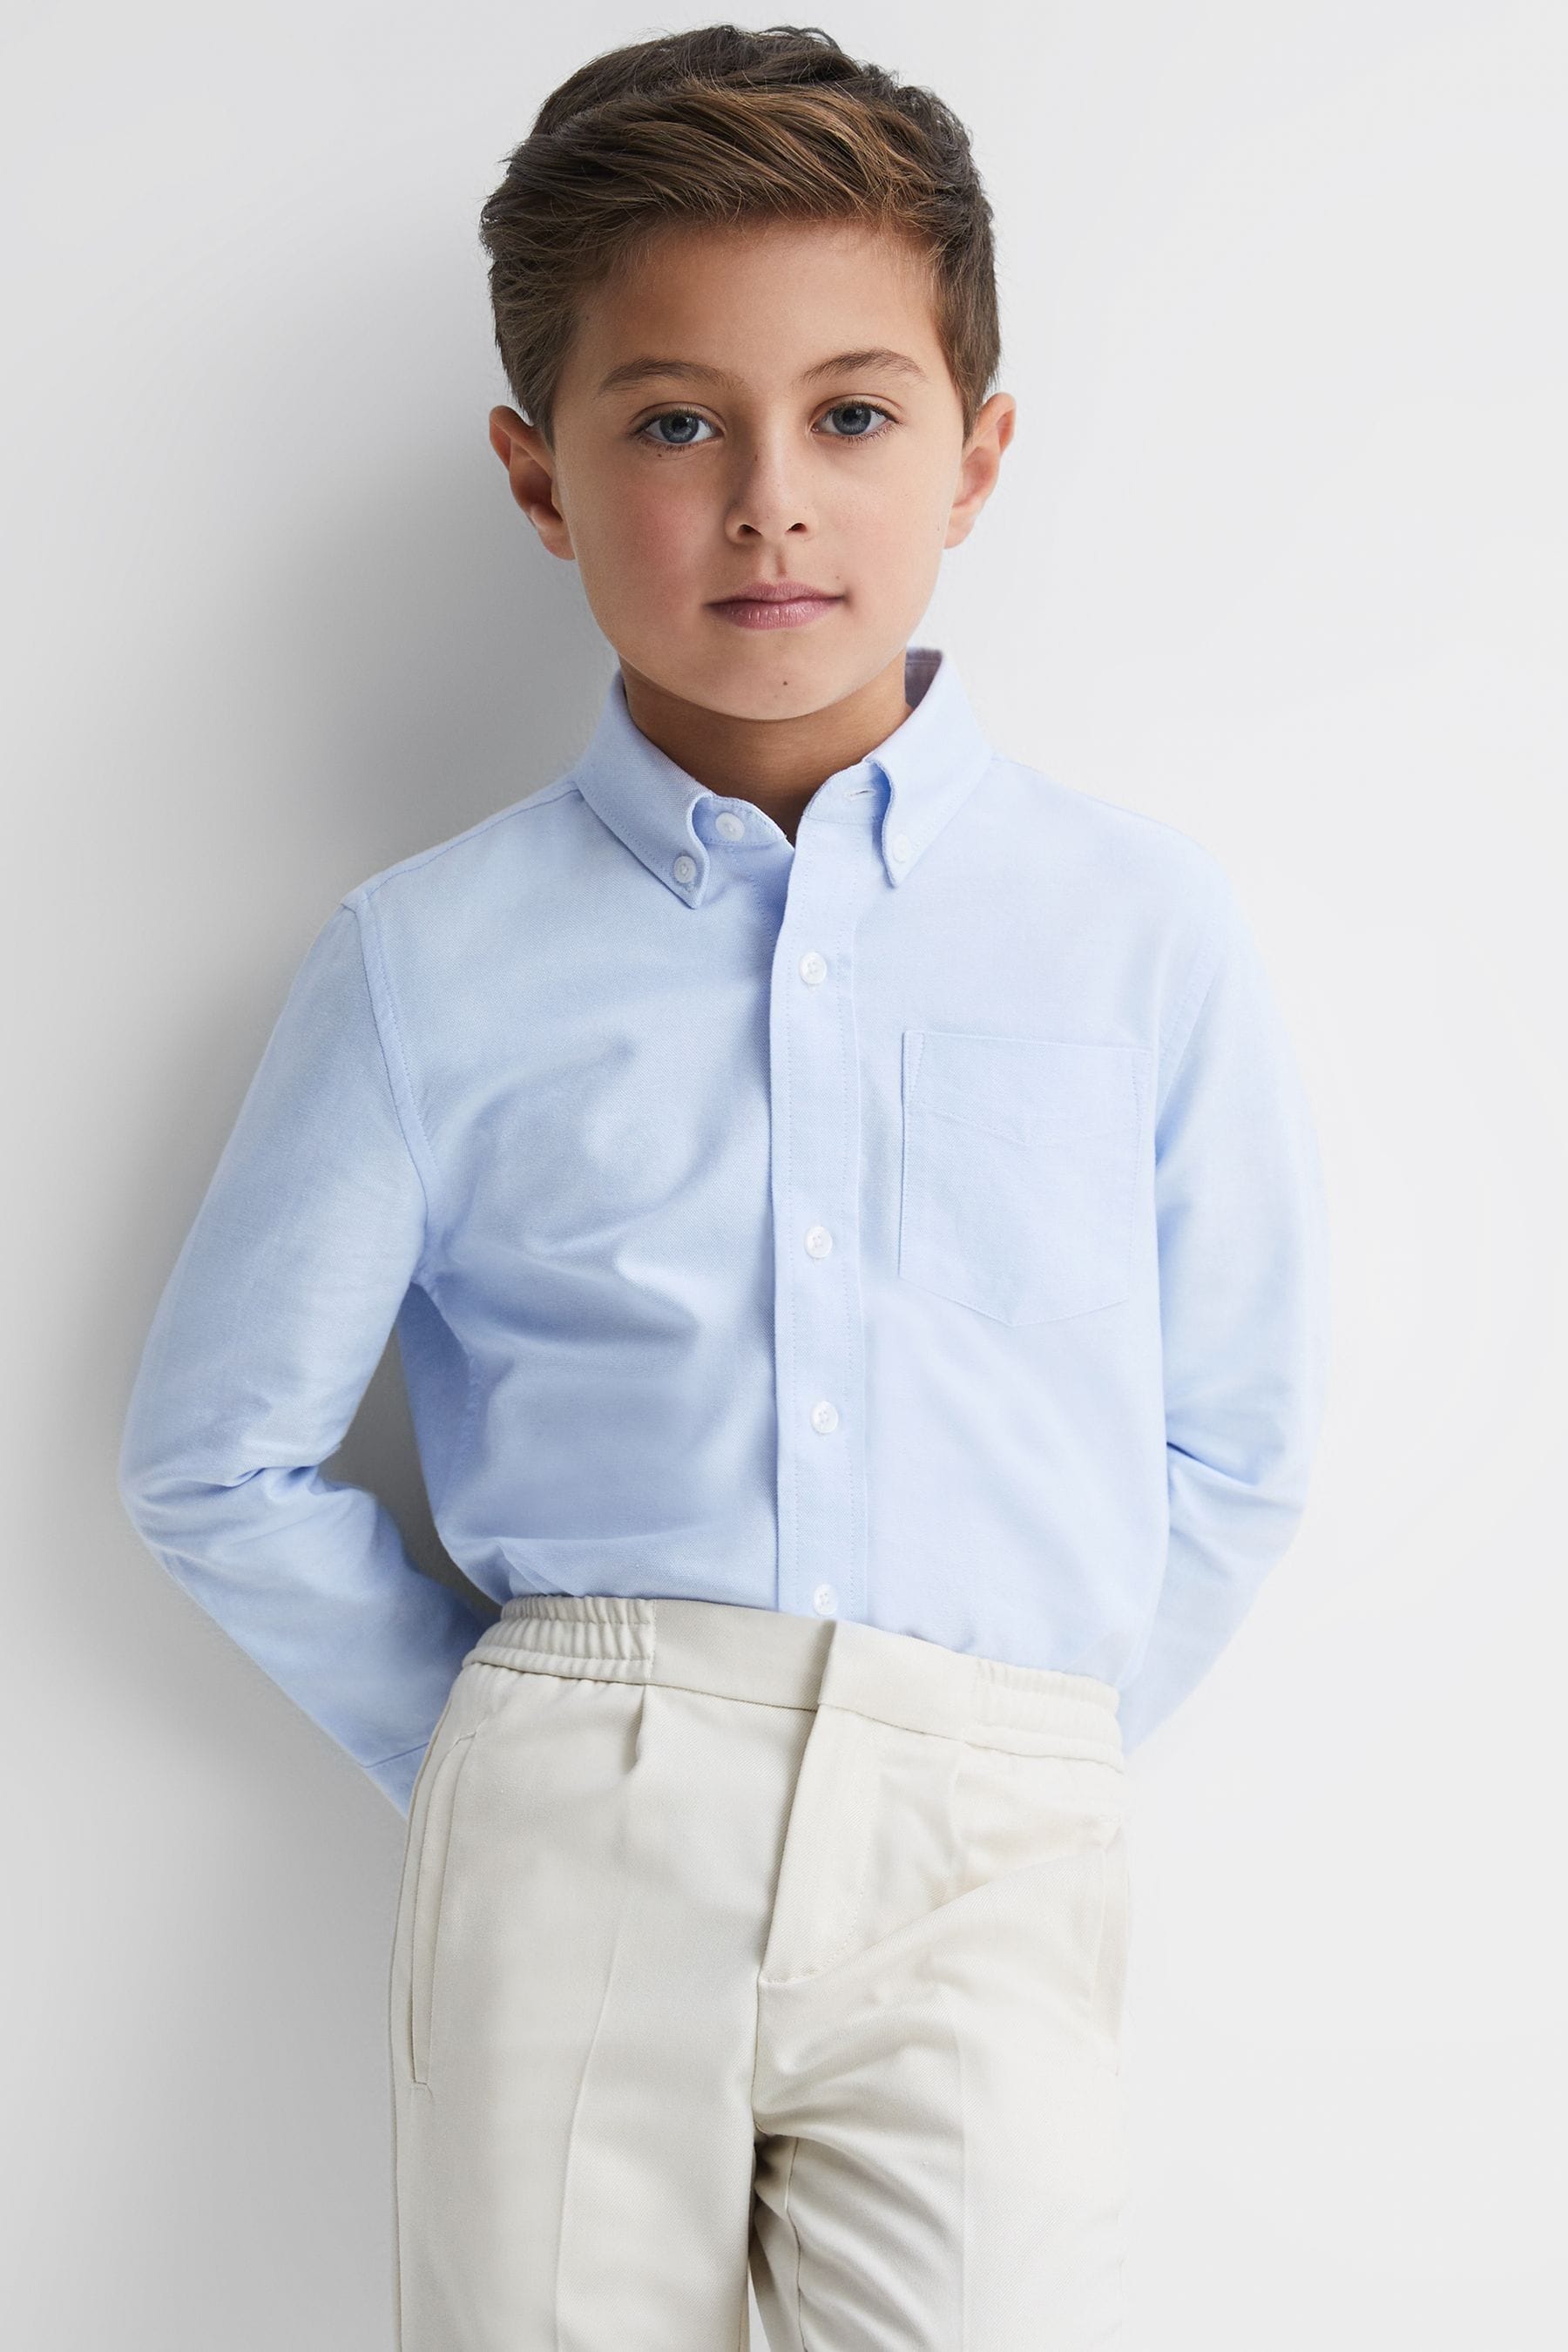 Reiss Greenwich - Soft Blue Junior Slim Fit Button-down Oxford Shirt, Uk 7-8 Yrs